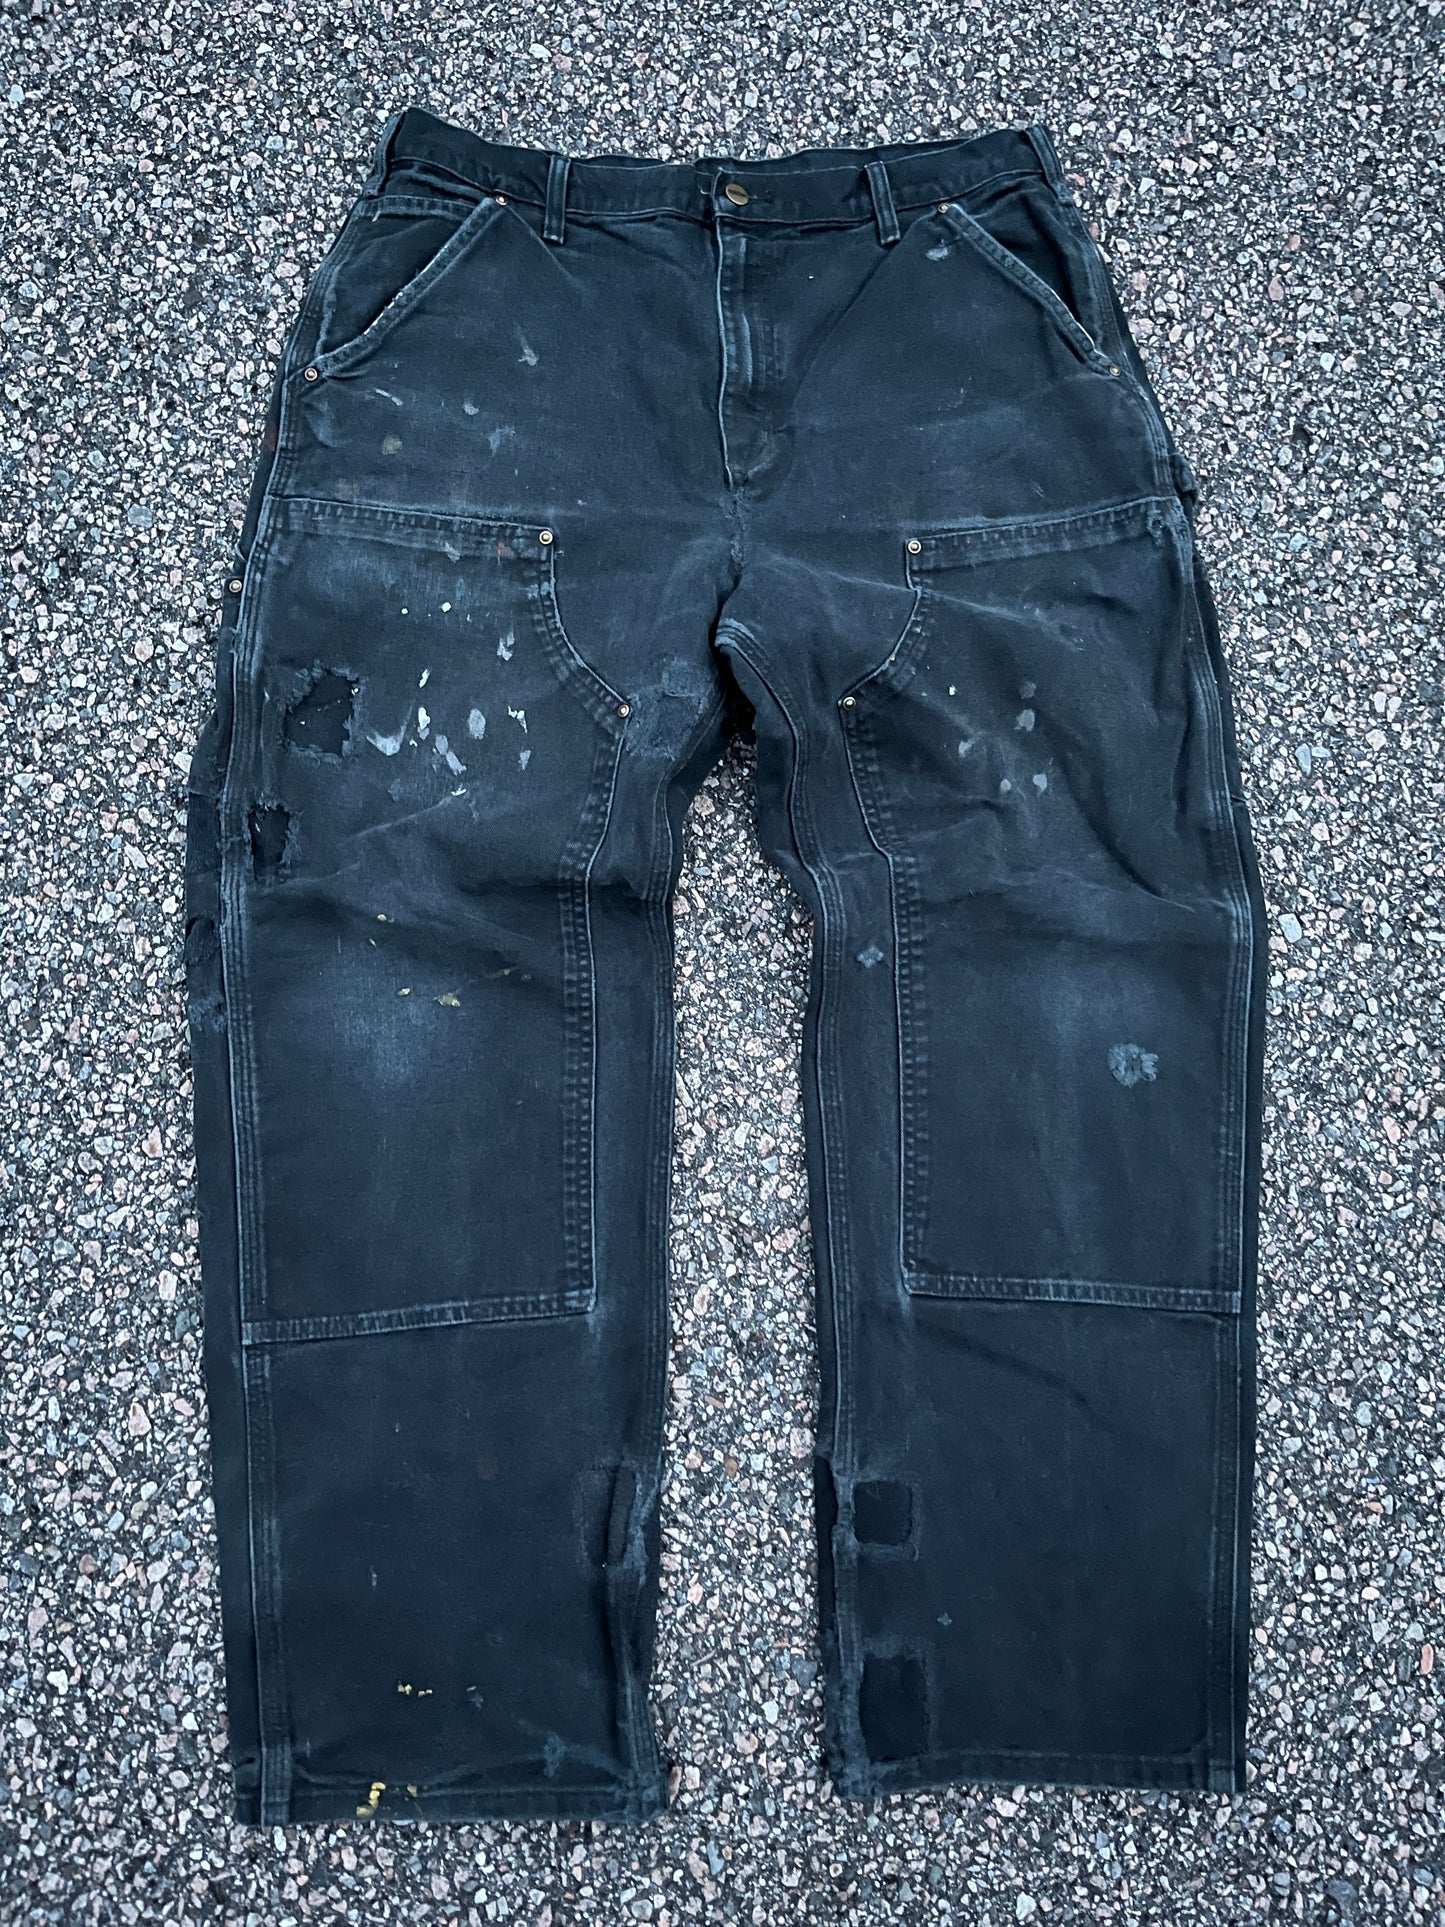 Faded Black Carhartt Double Knee Pants - 35 x 30